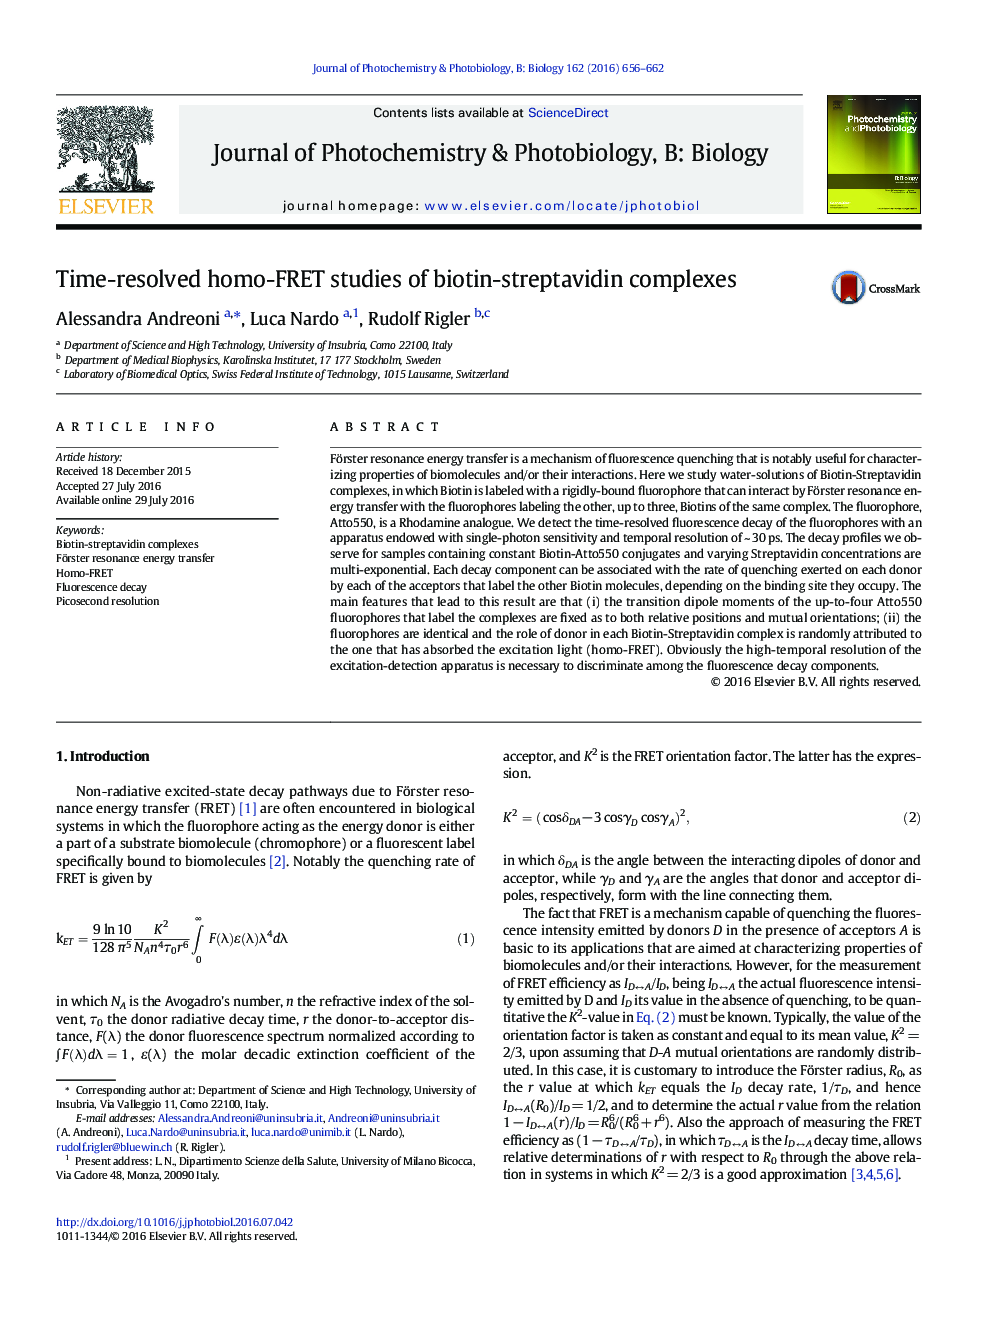 Time-resolved homo-FRET studies of biotin-streptavidin complexes